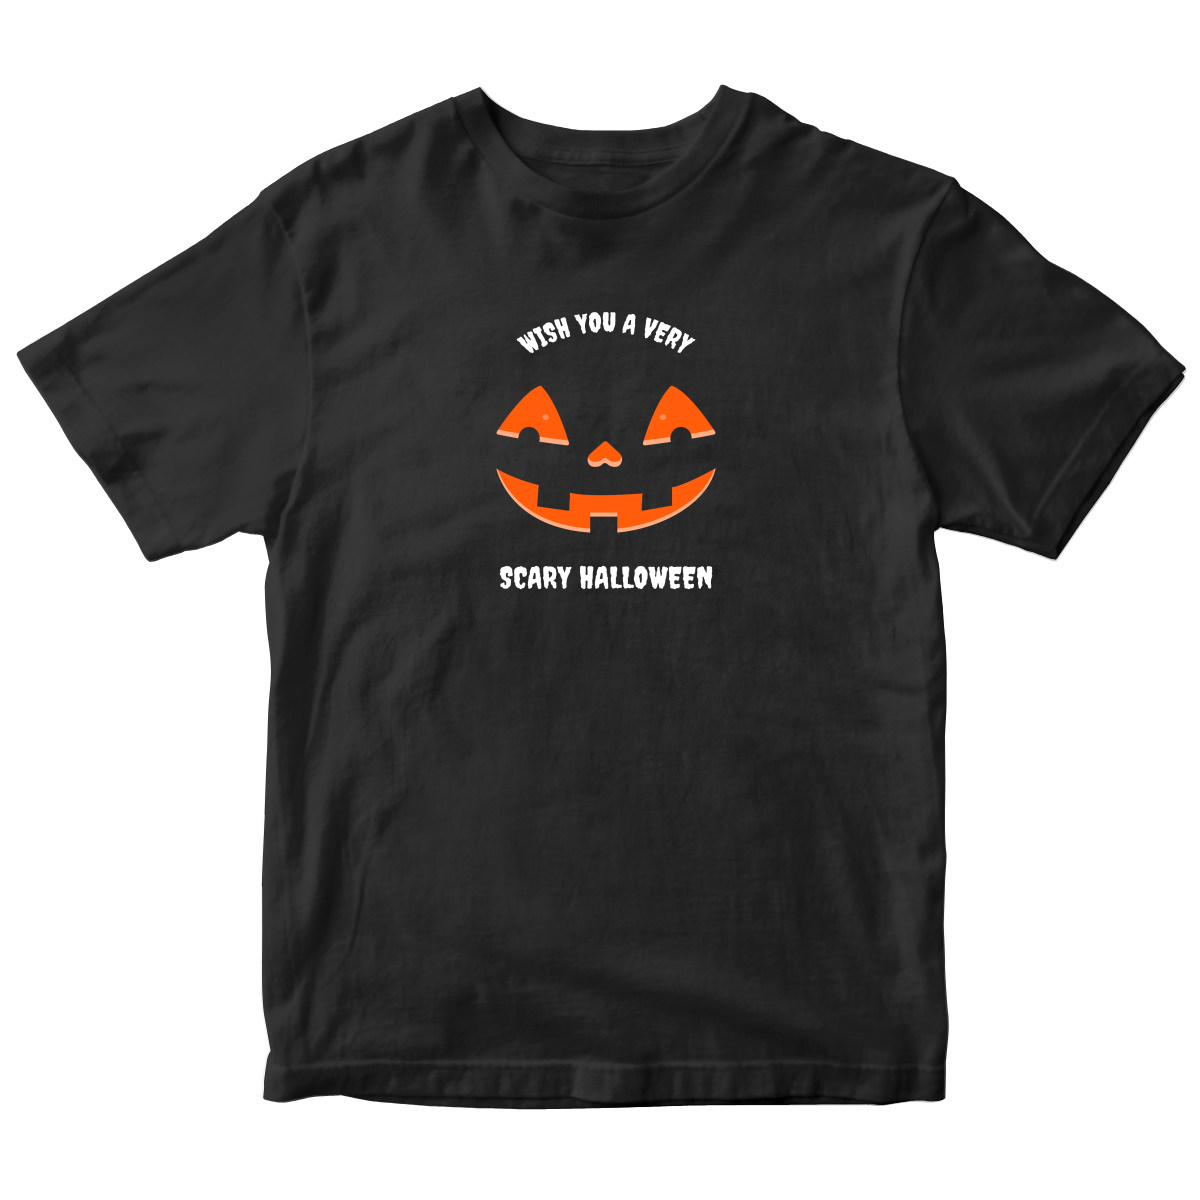 Wish You a Very Scary Halloween Kids T-shirt | Black